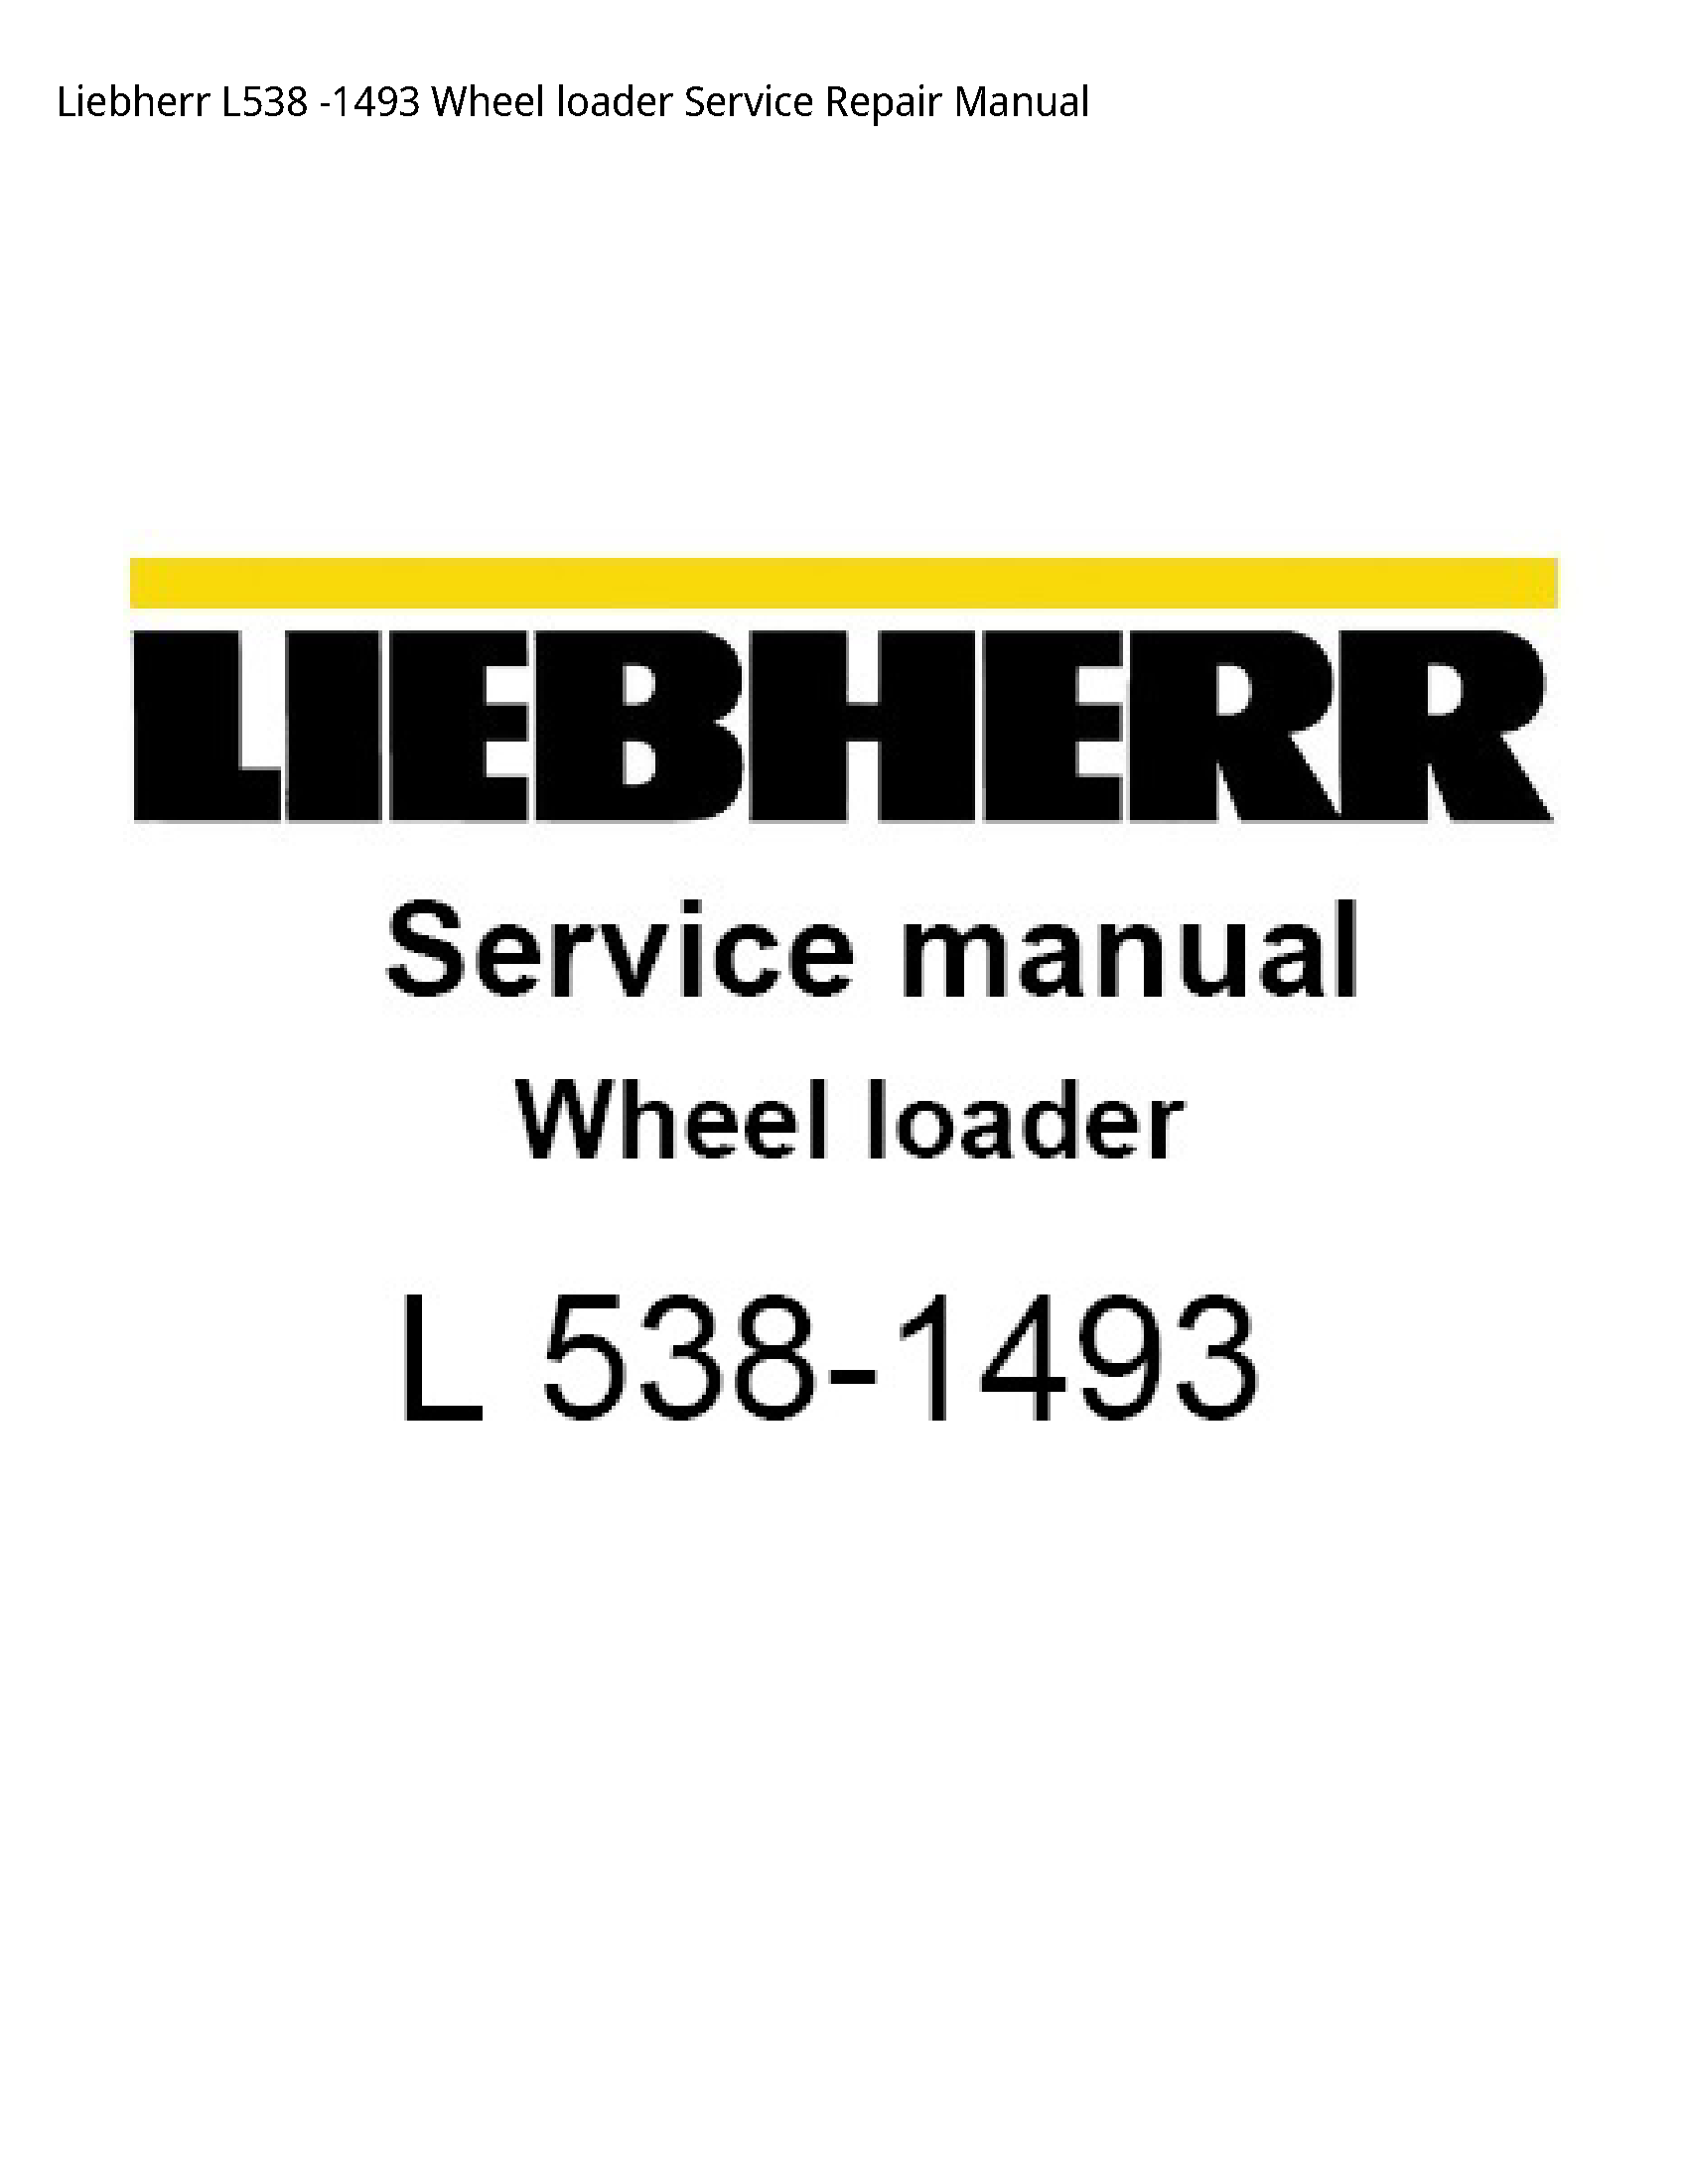 Liebherr L538 Wheel loader manual